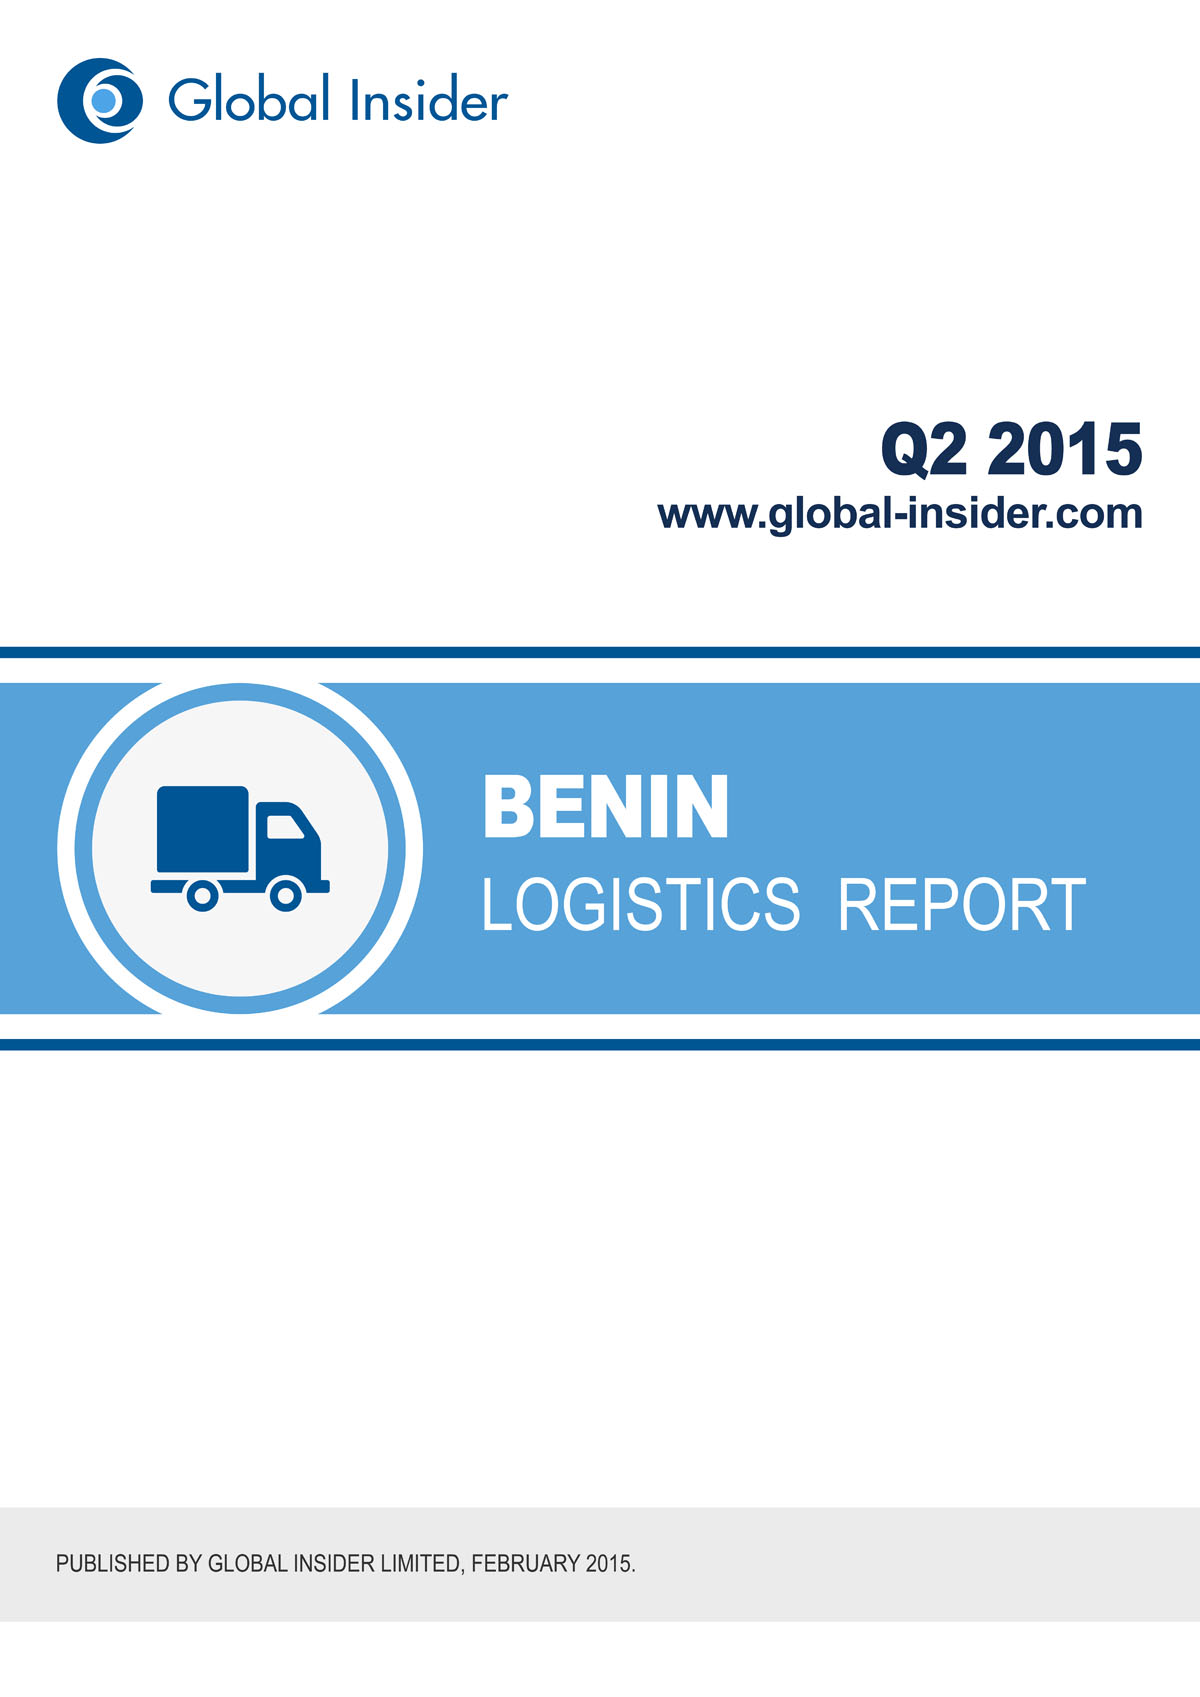 Benin Logistics Report